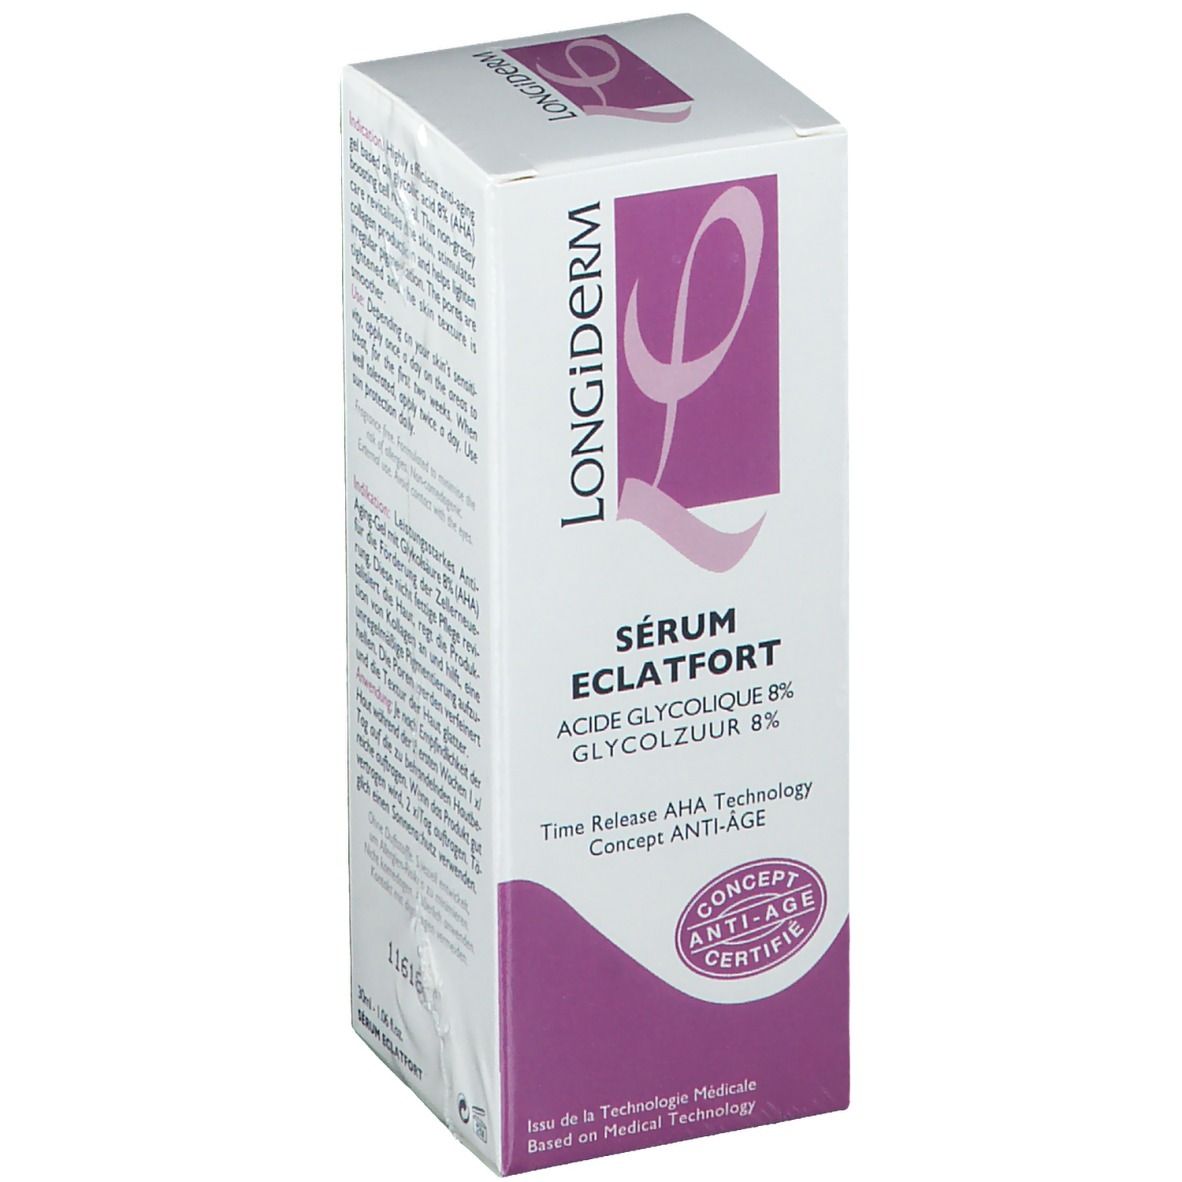 LONGiDerm Anti-Age Eclatfort 8% Serum